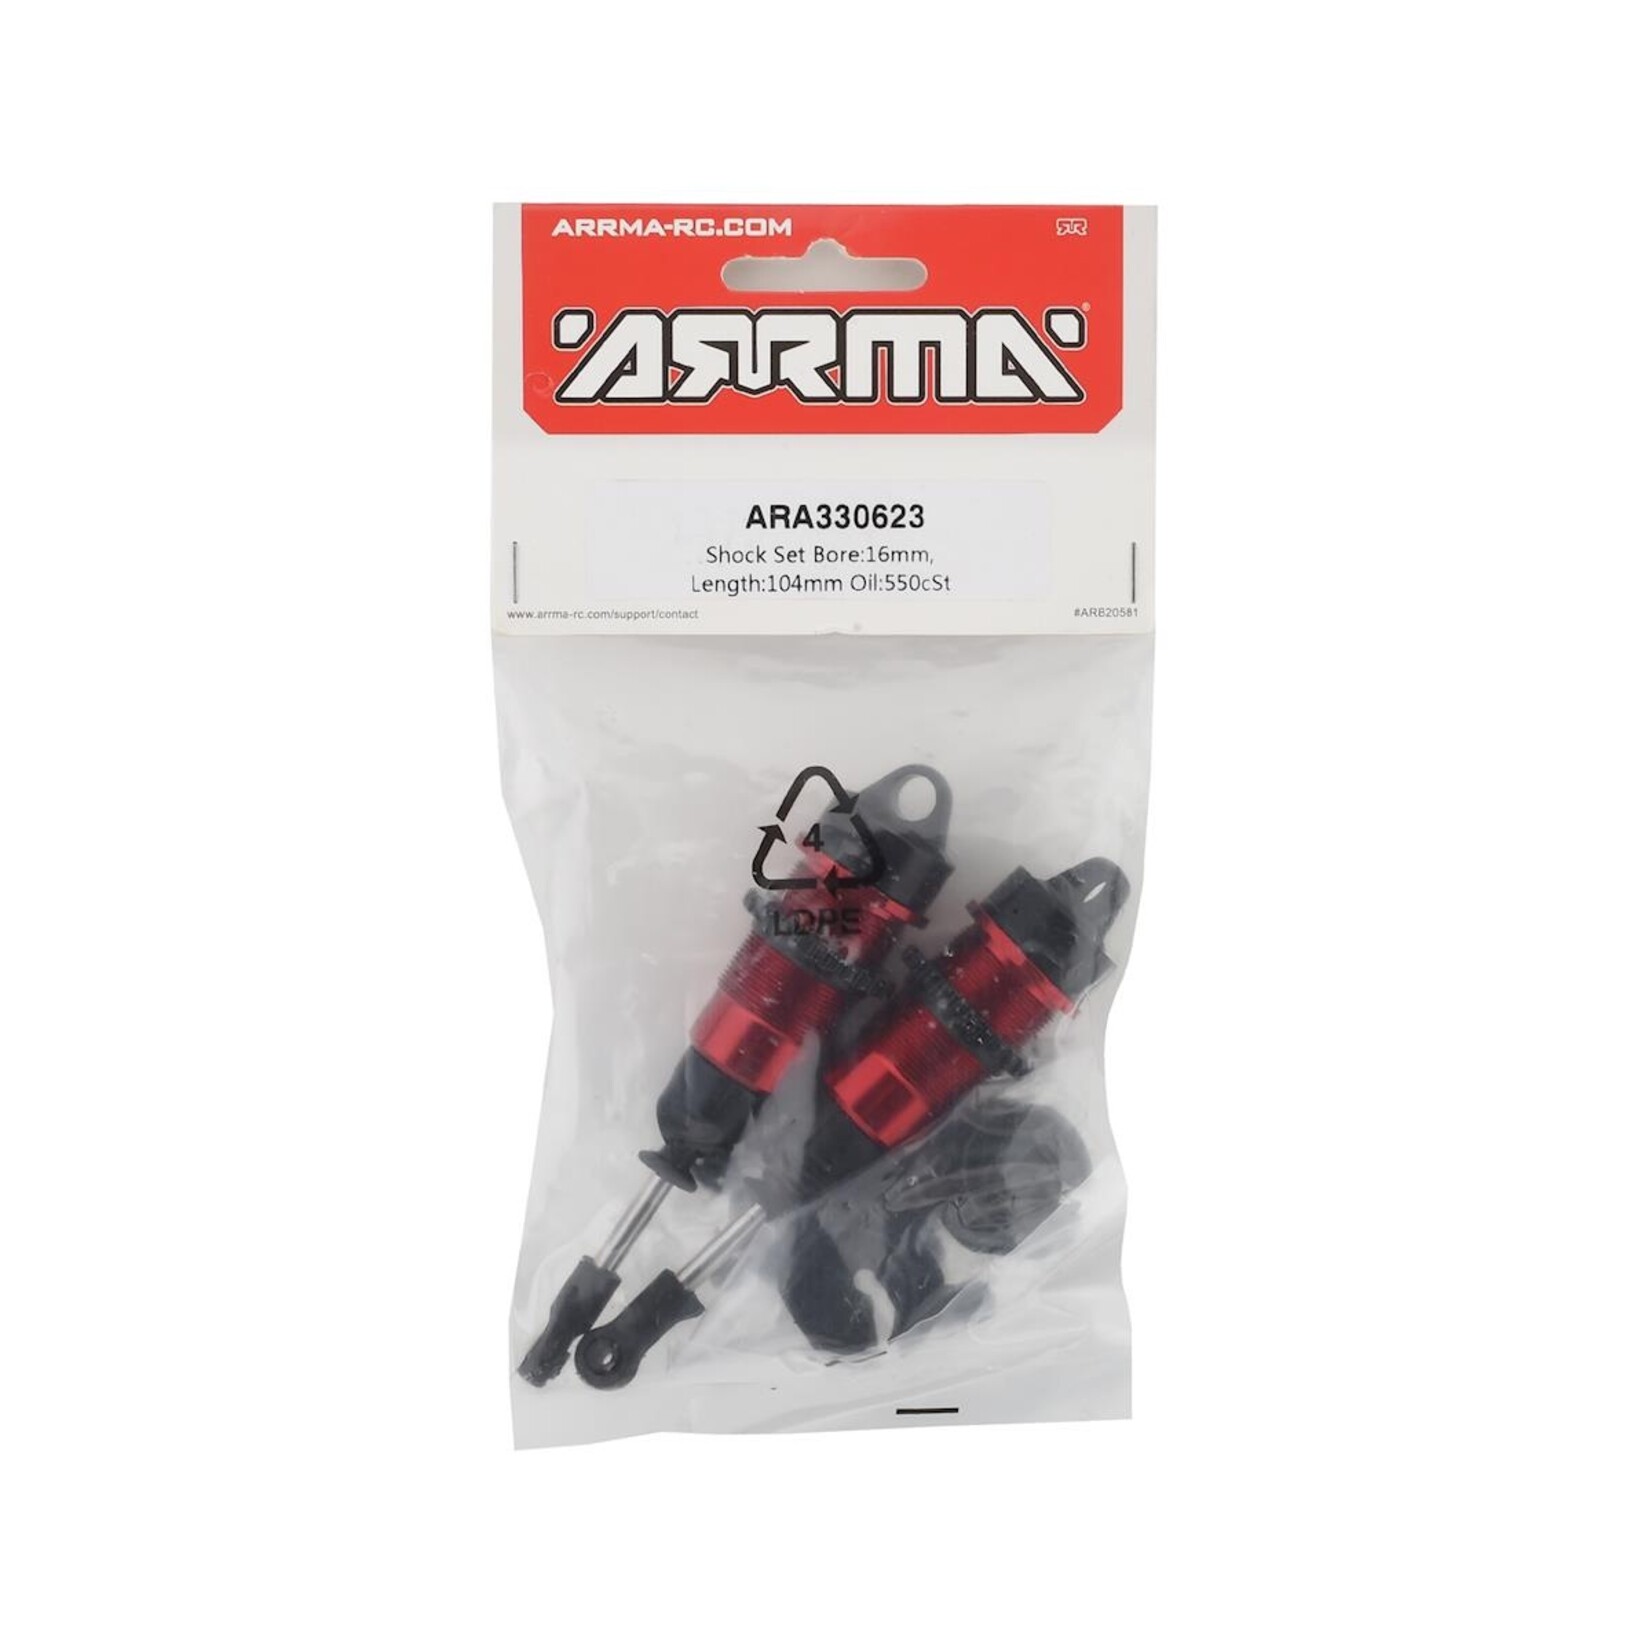 ARRMA Arrma Typhon 6S BLX Front Shock Set (2) (104mm) #ARA330623